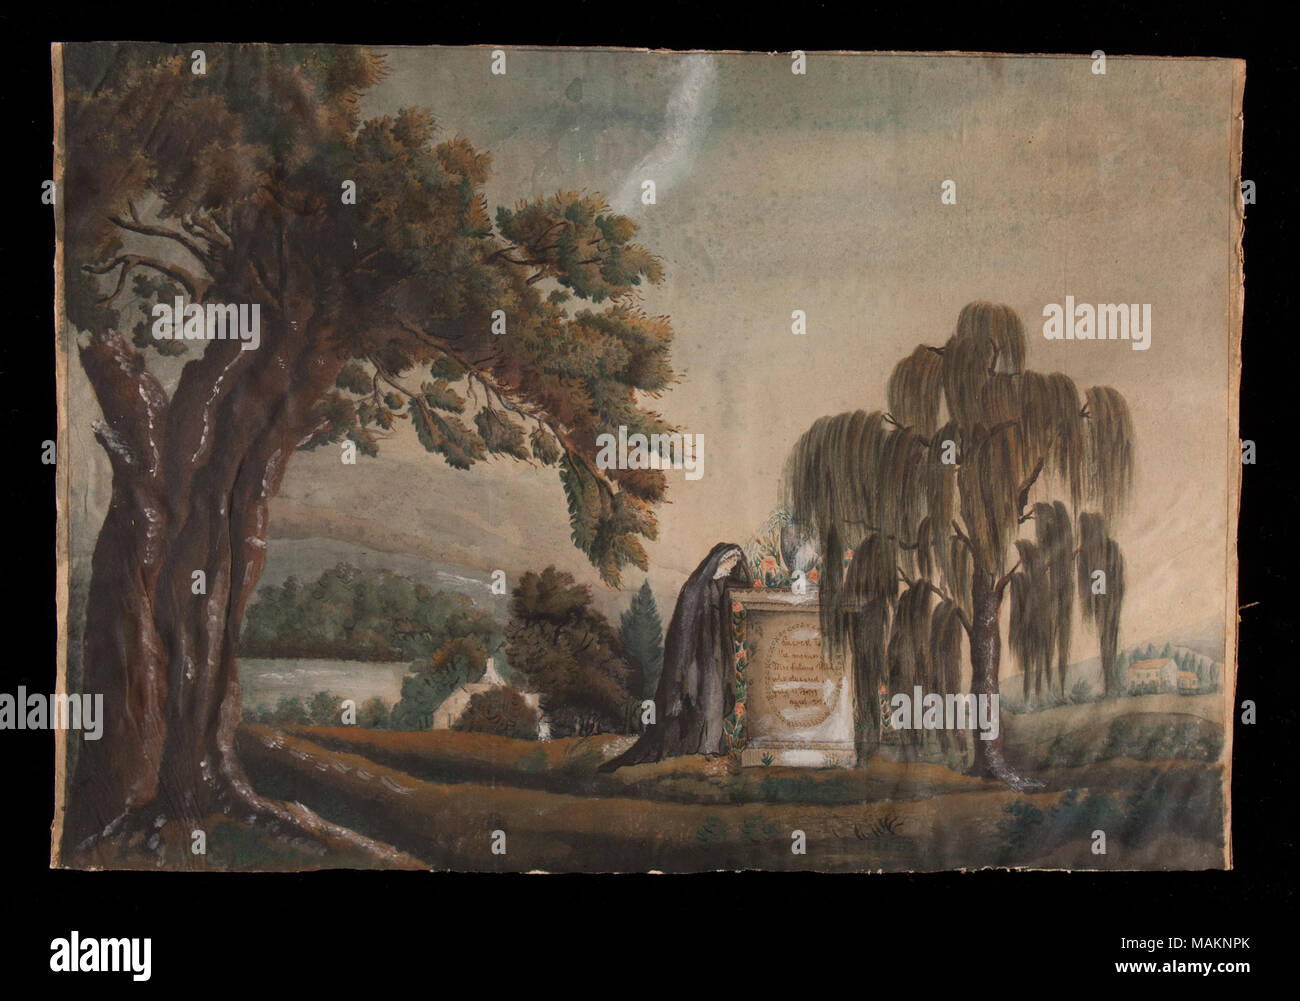 Aquarell Malerei eines Denkmals Szene ehrt Frau Salome Holz, Mutter von Maria Holz Koppel, der am 11. Juli 1799 enthalten. Titel: Memorial Szene für Frau Salome Holz. 1799. Stockfoto